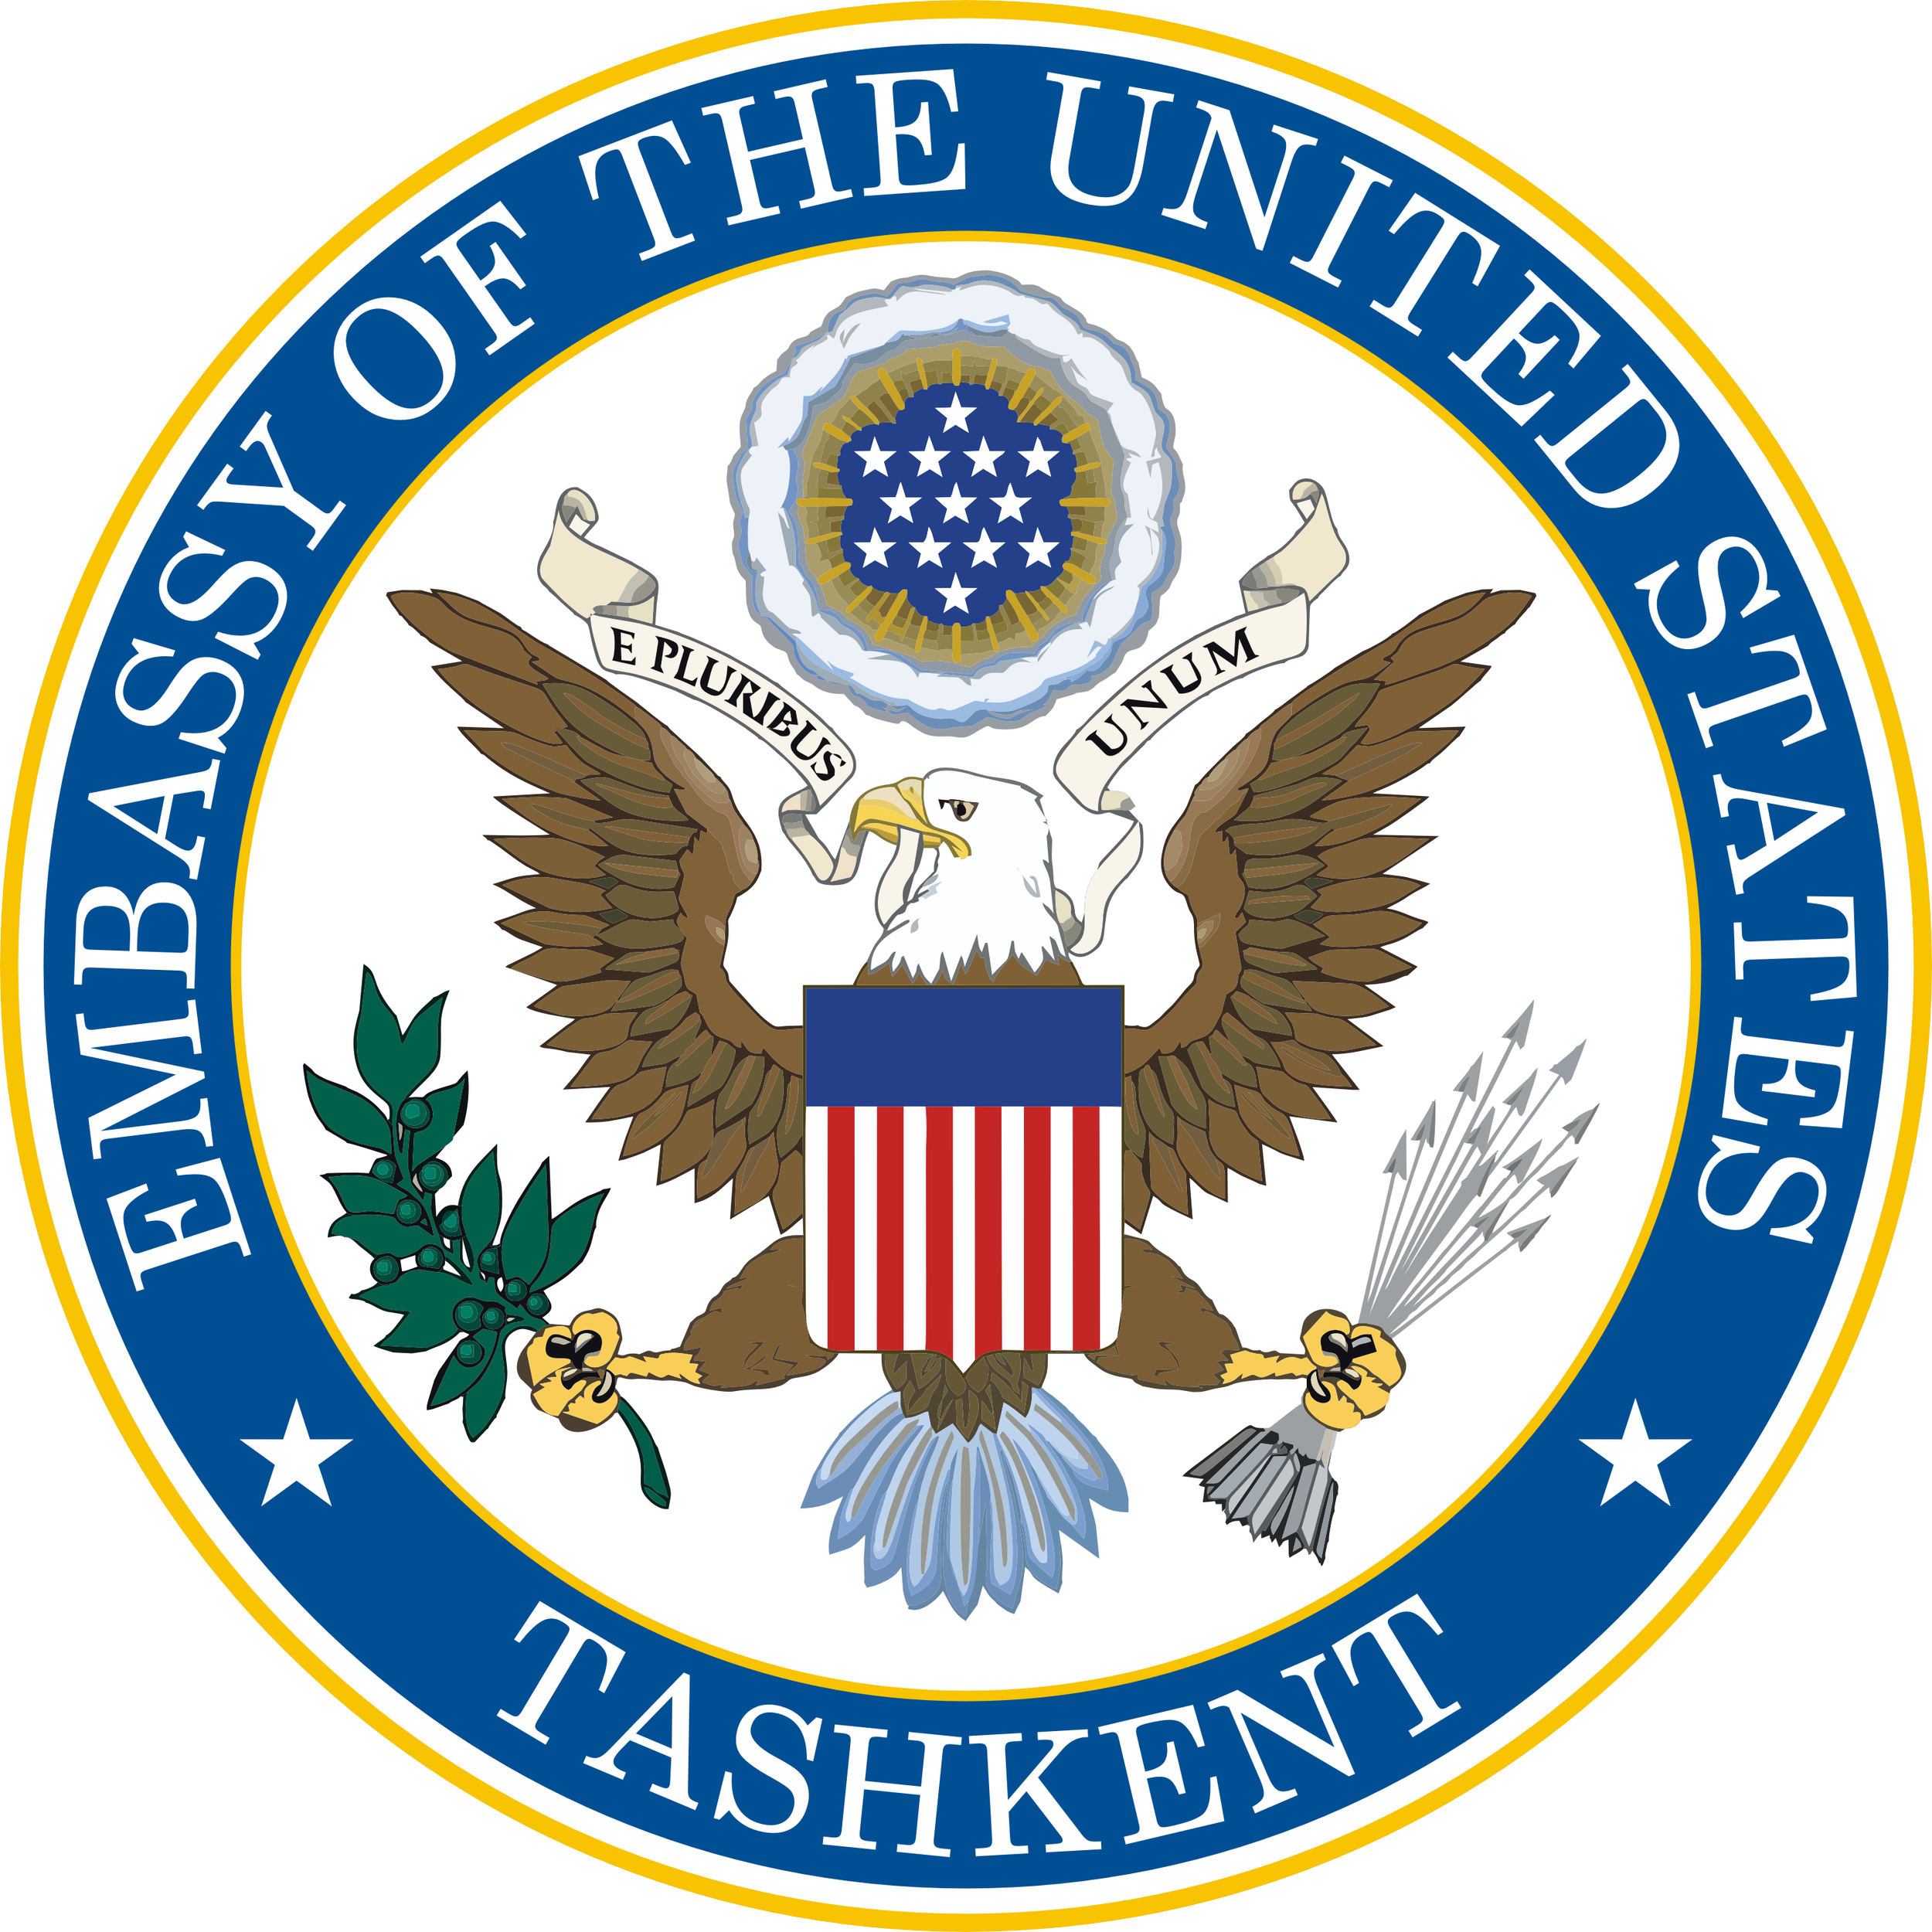 State-Seal-Tashkent-3 embassy of the united states tashkent.png